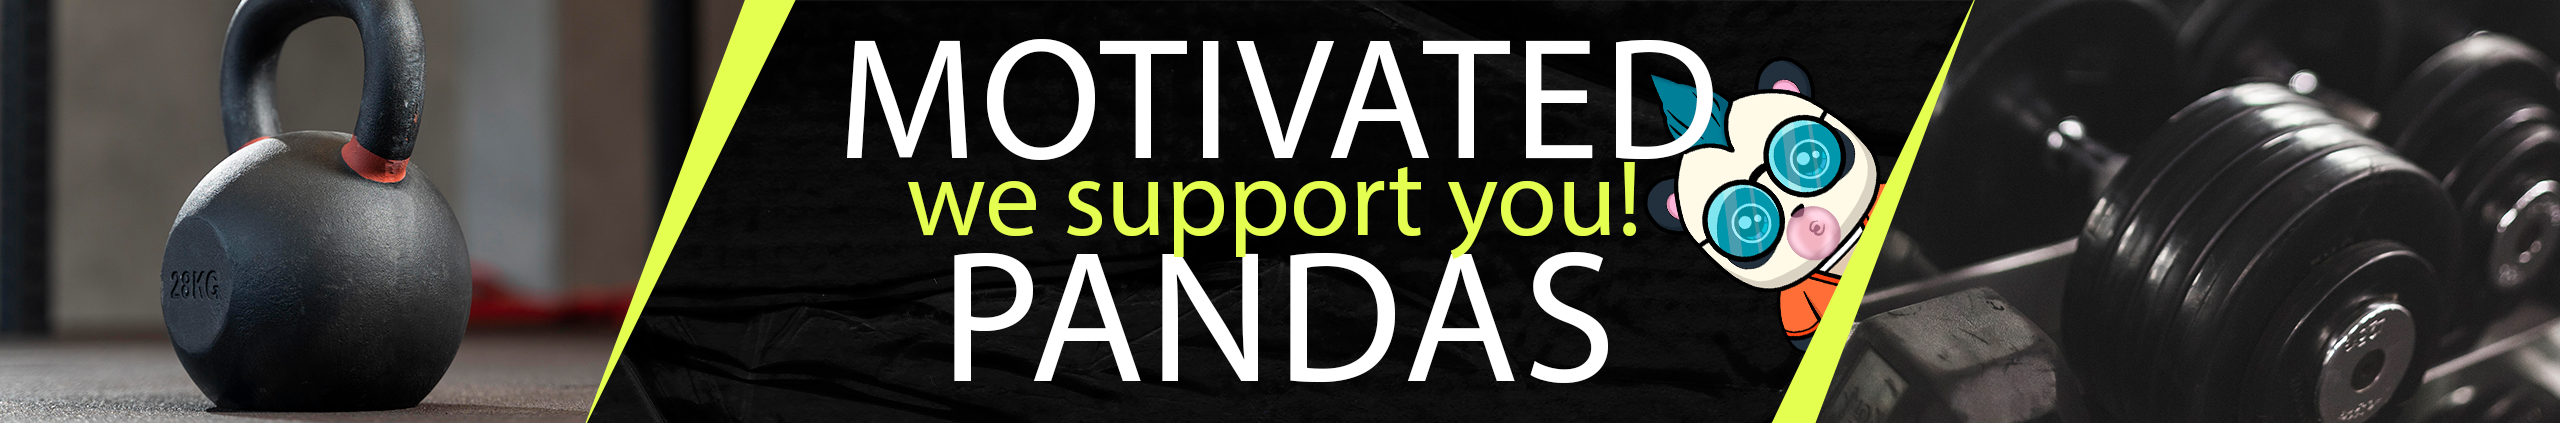 Motivated Pandas